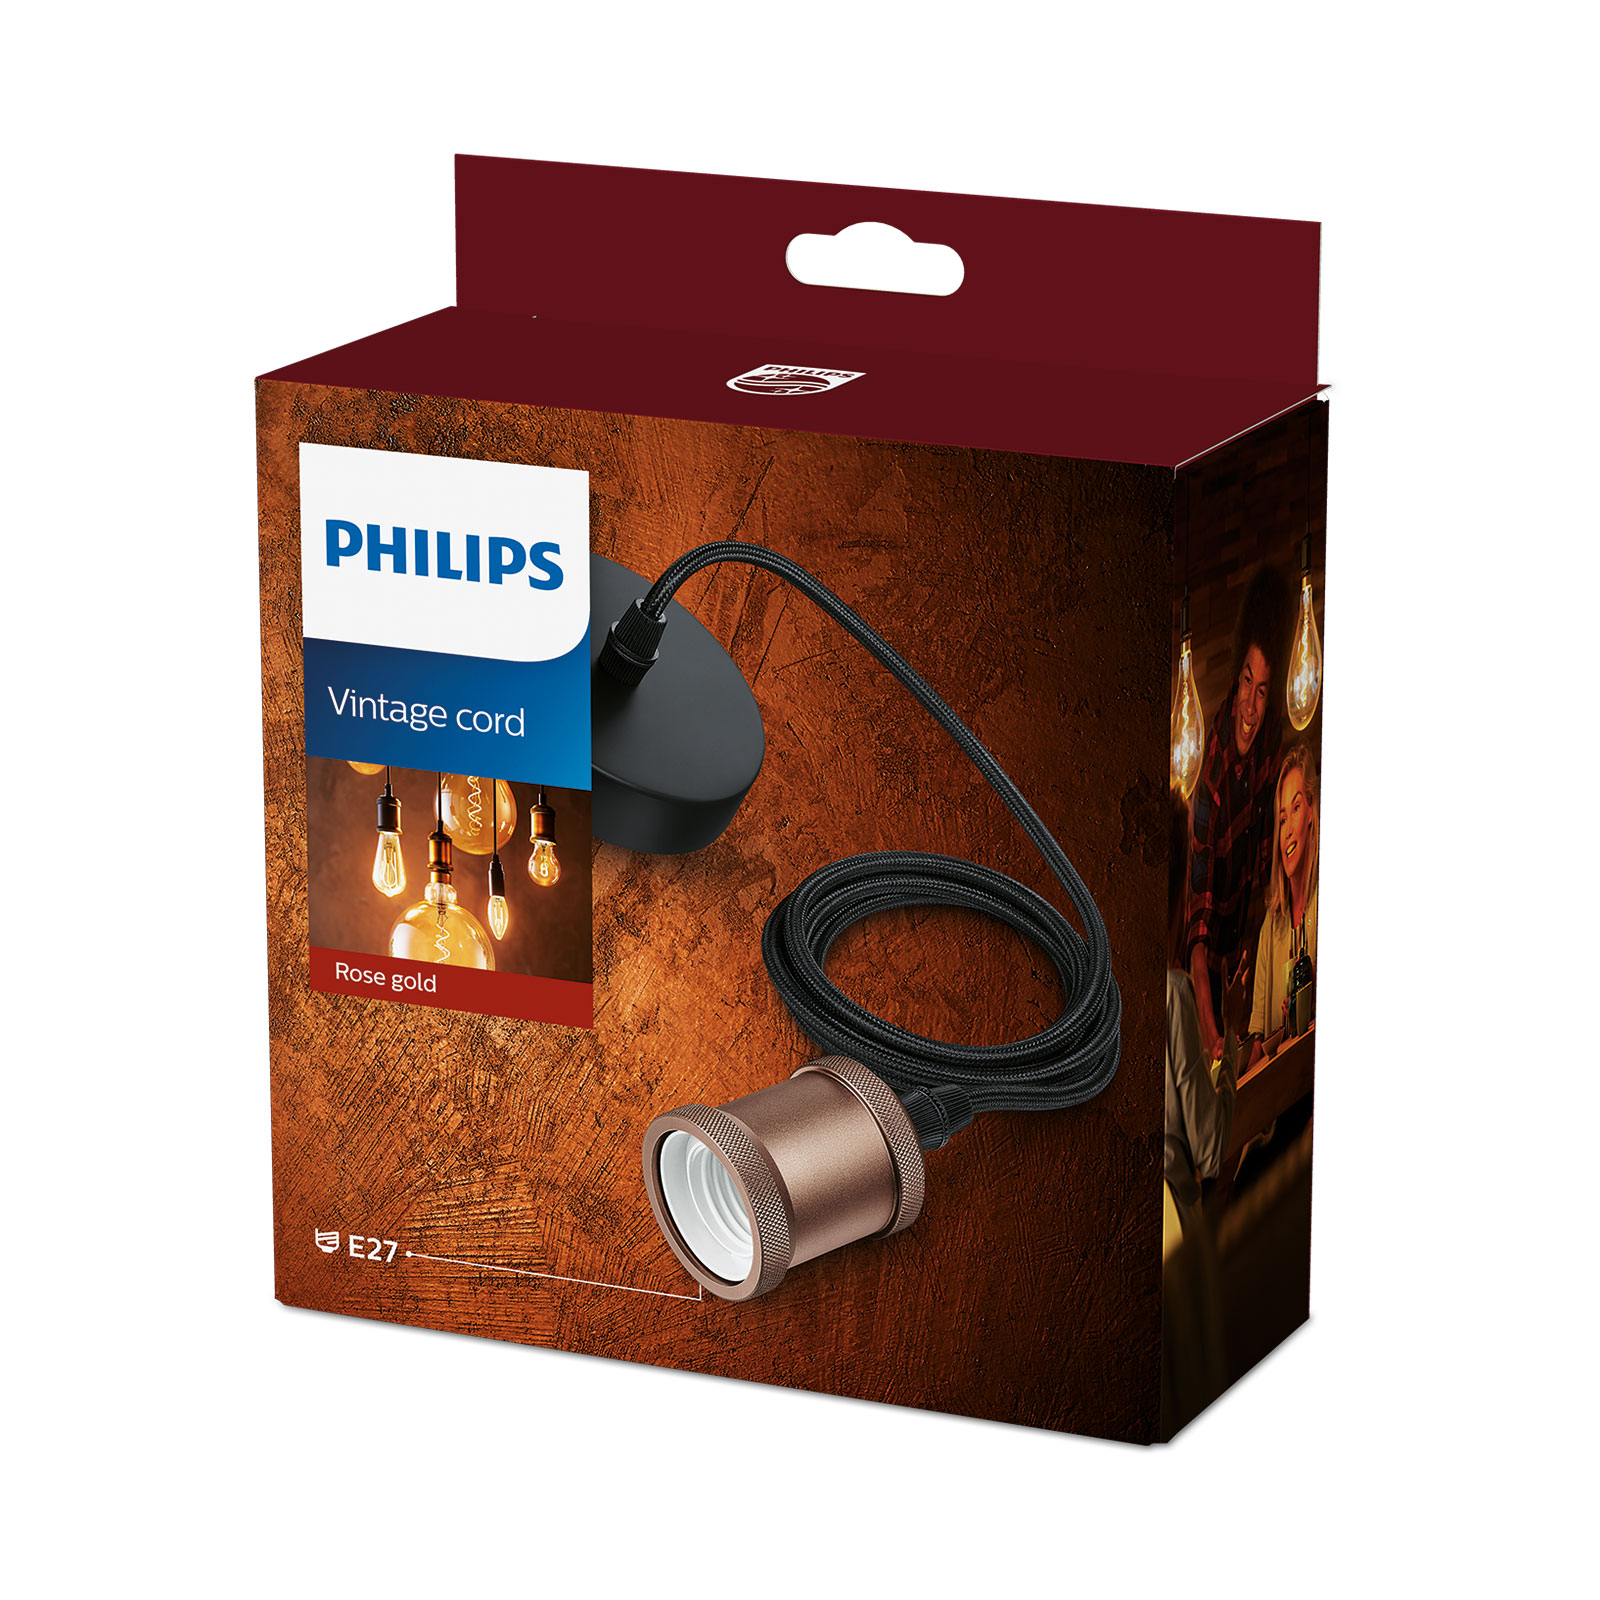 Philips Vintage -riippuvalo E27, roségold